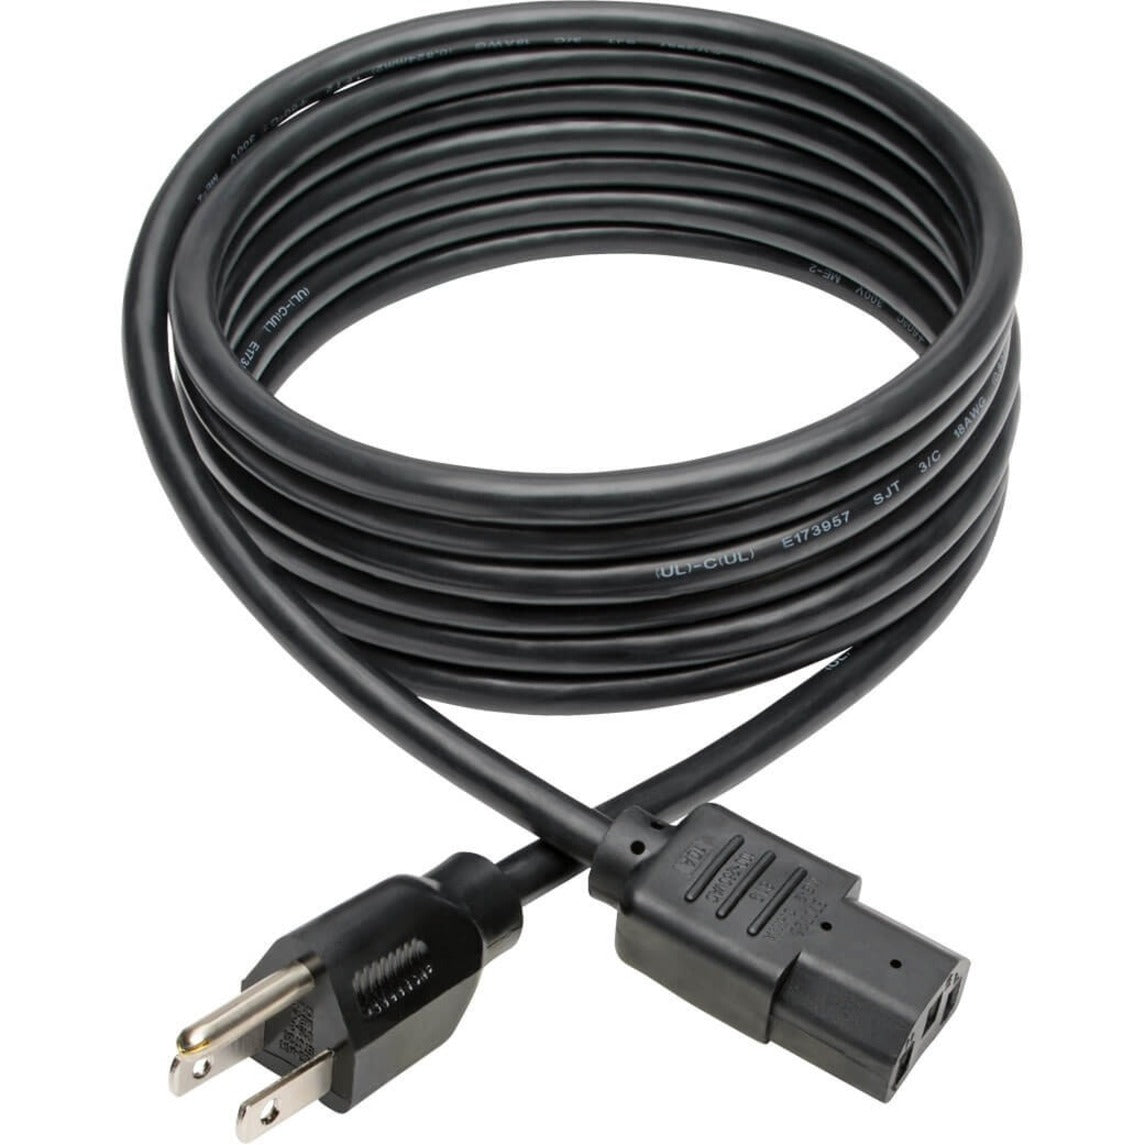 Tripp Lite P006-010 Standard Power Cord, 10 ft, 125V AC, 10A, Black